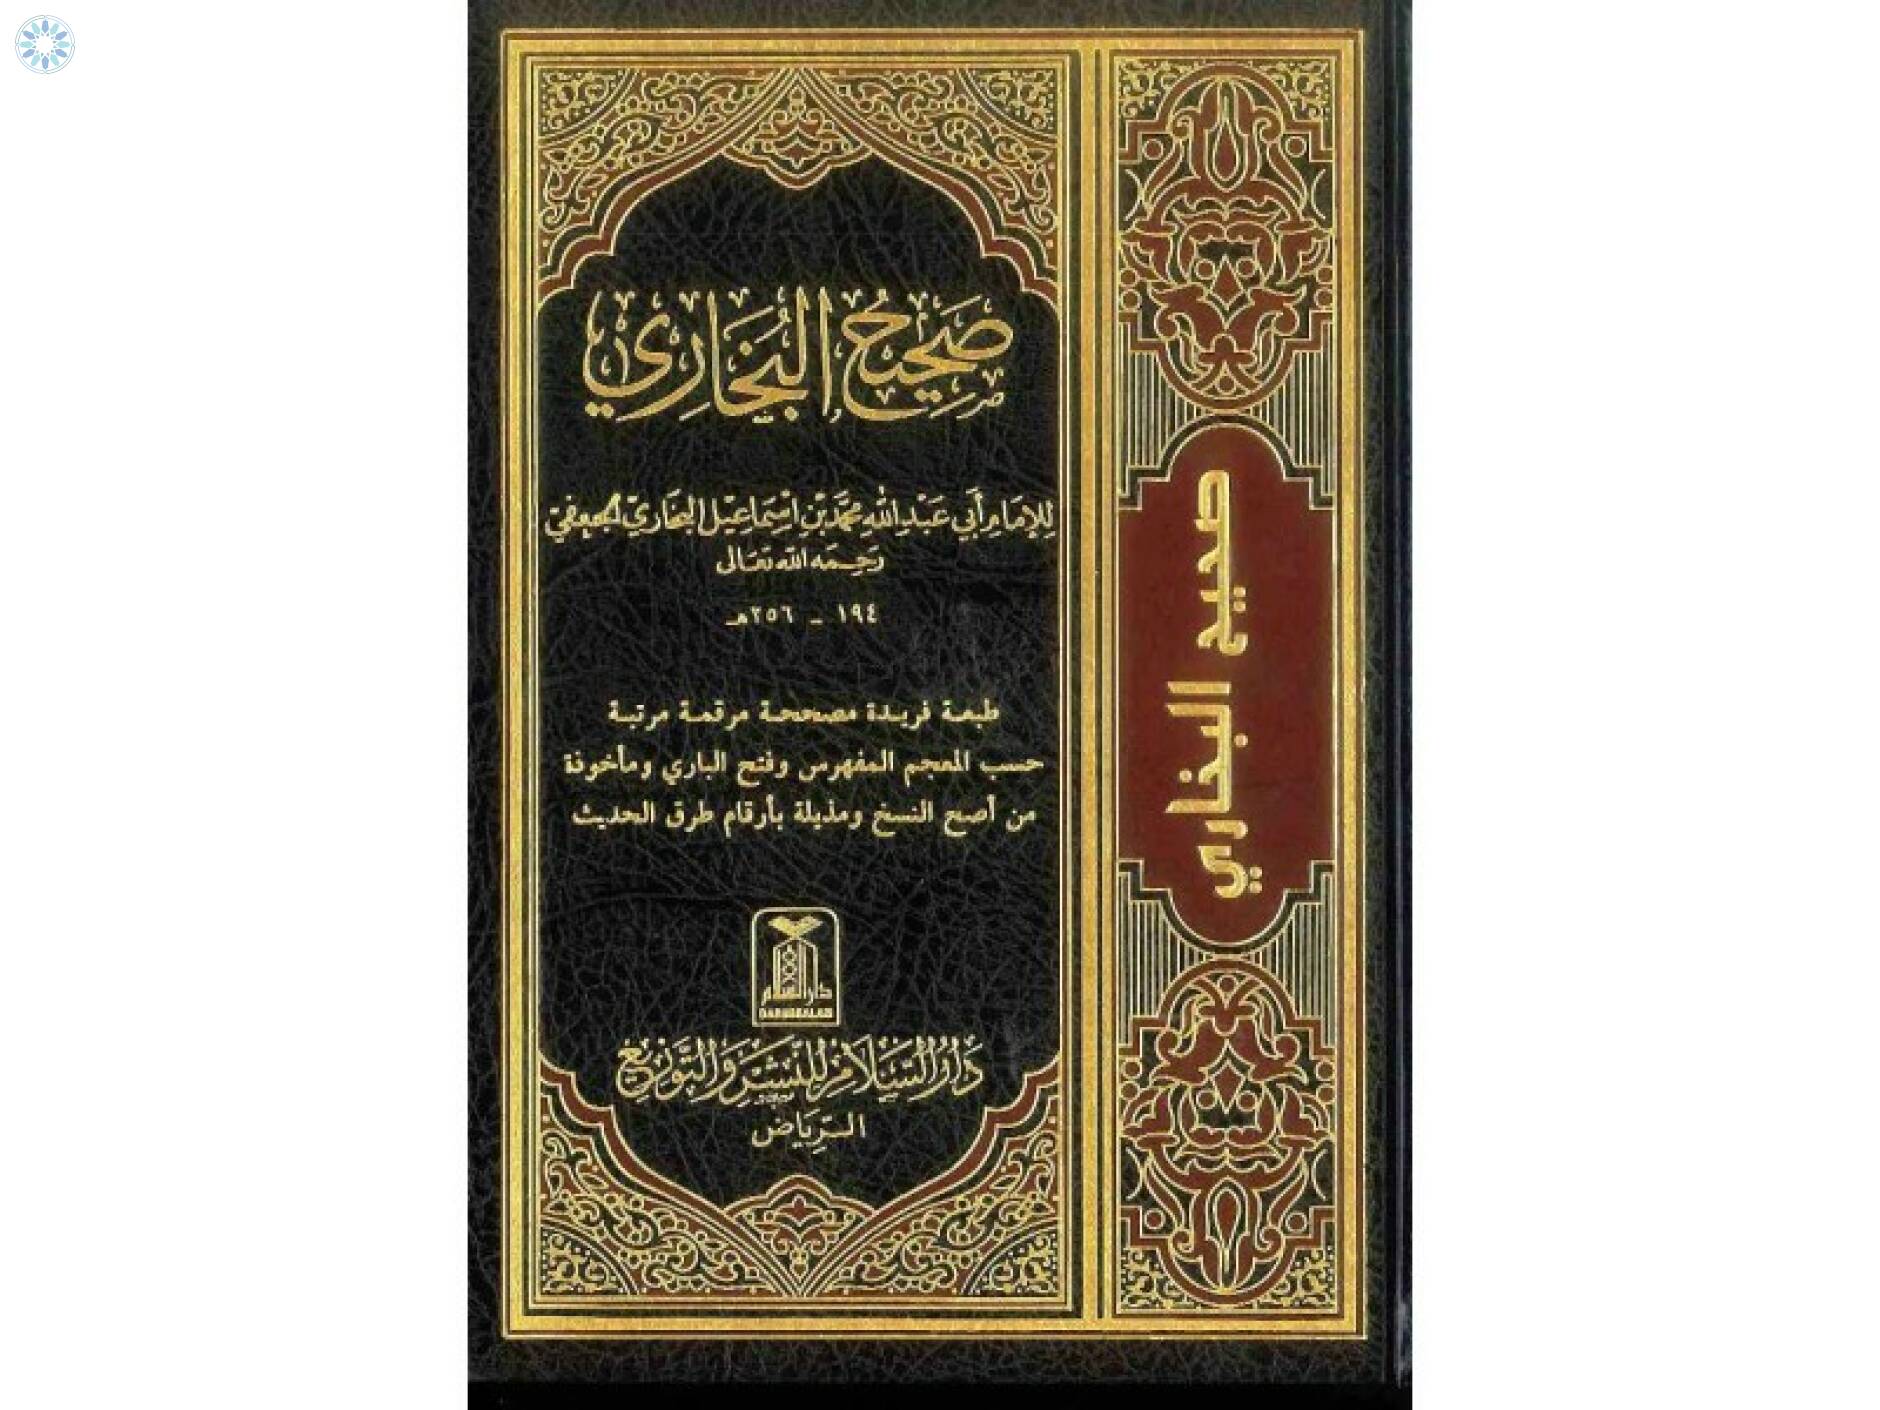 Сахих аль джами. Имам Аль Бухари Сахих. Сборник хадисов Сахих Аль Бухари. Книги имама Аль Бухари.